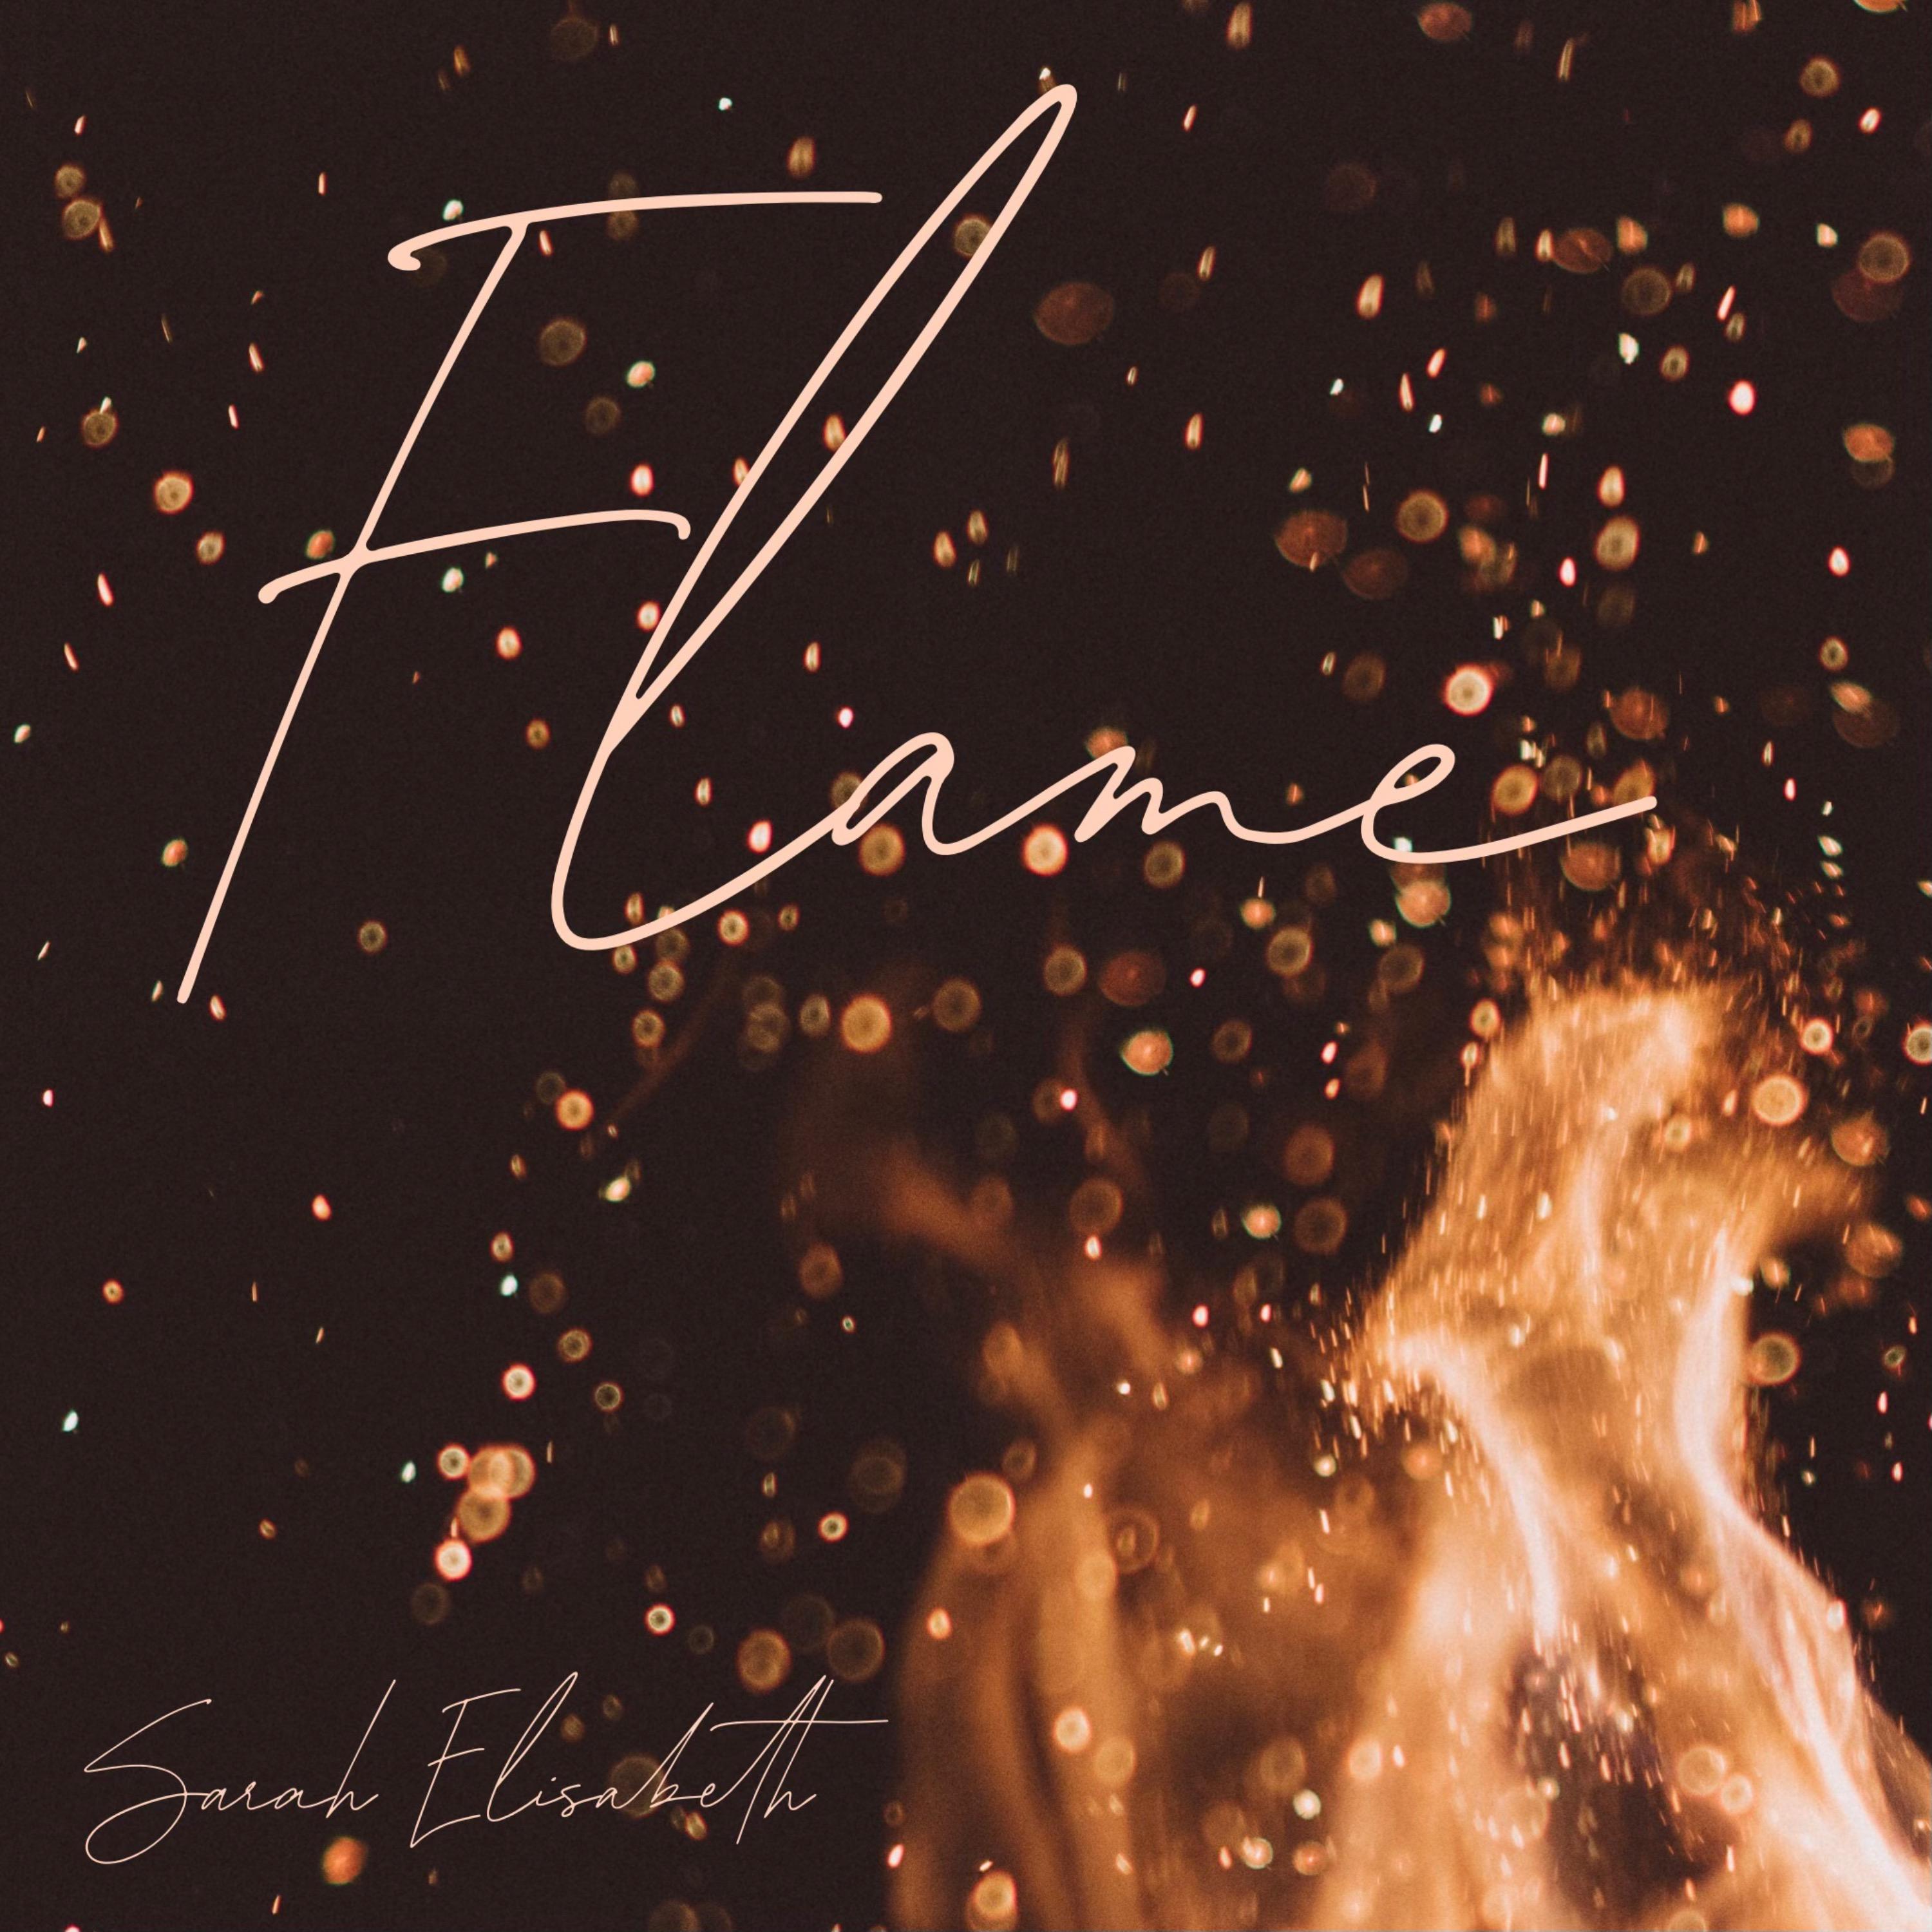 Sarah Elisabeth - Flame